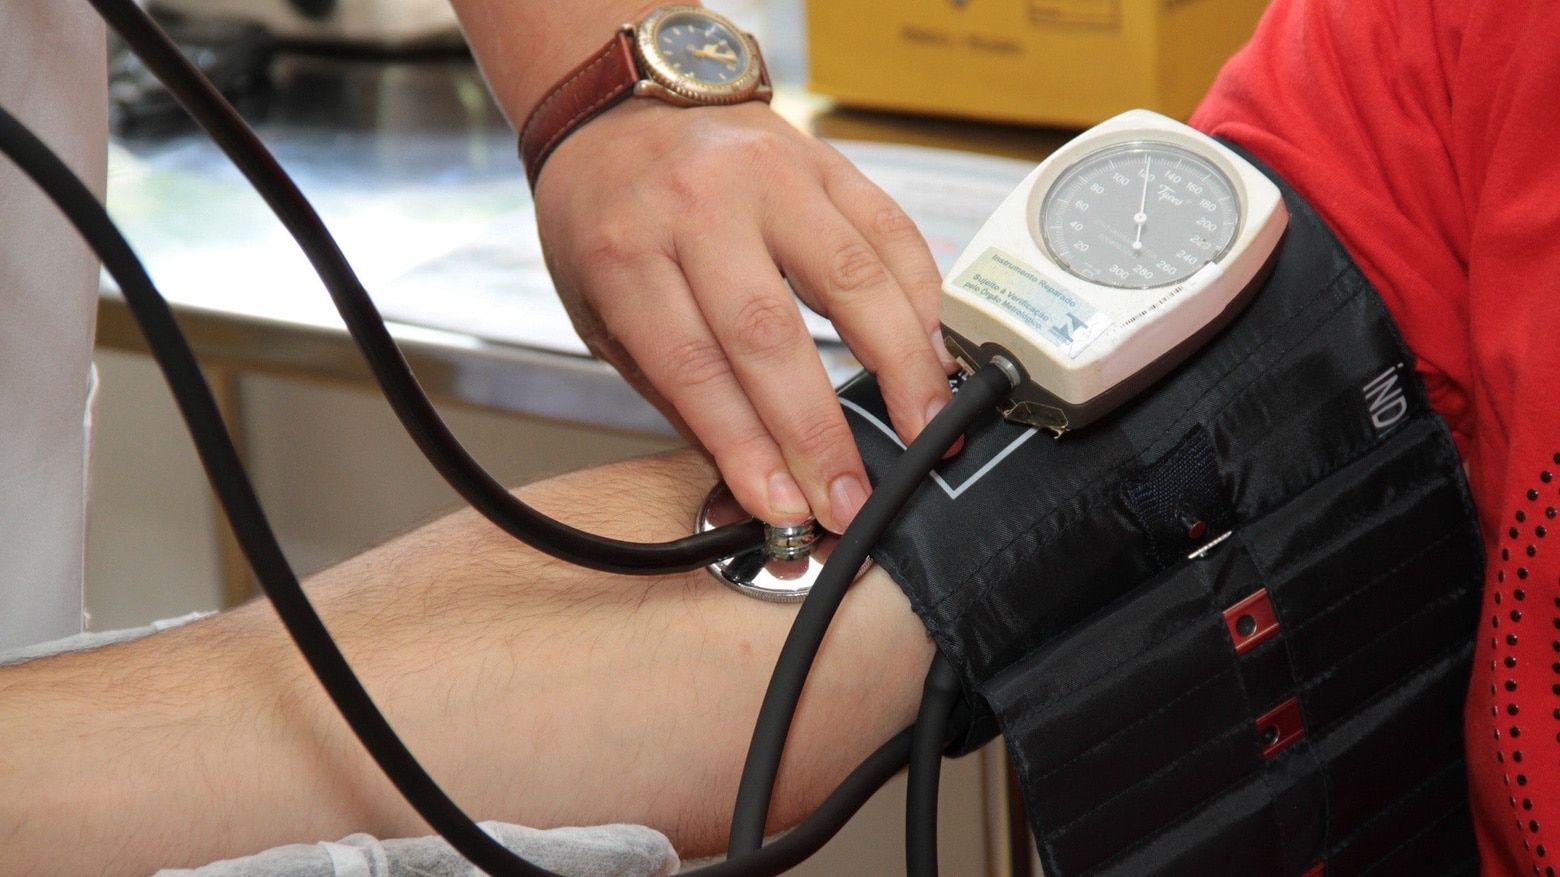 Blood pressure testing